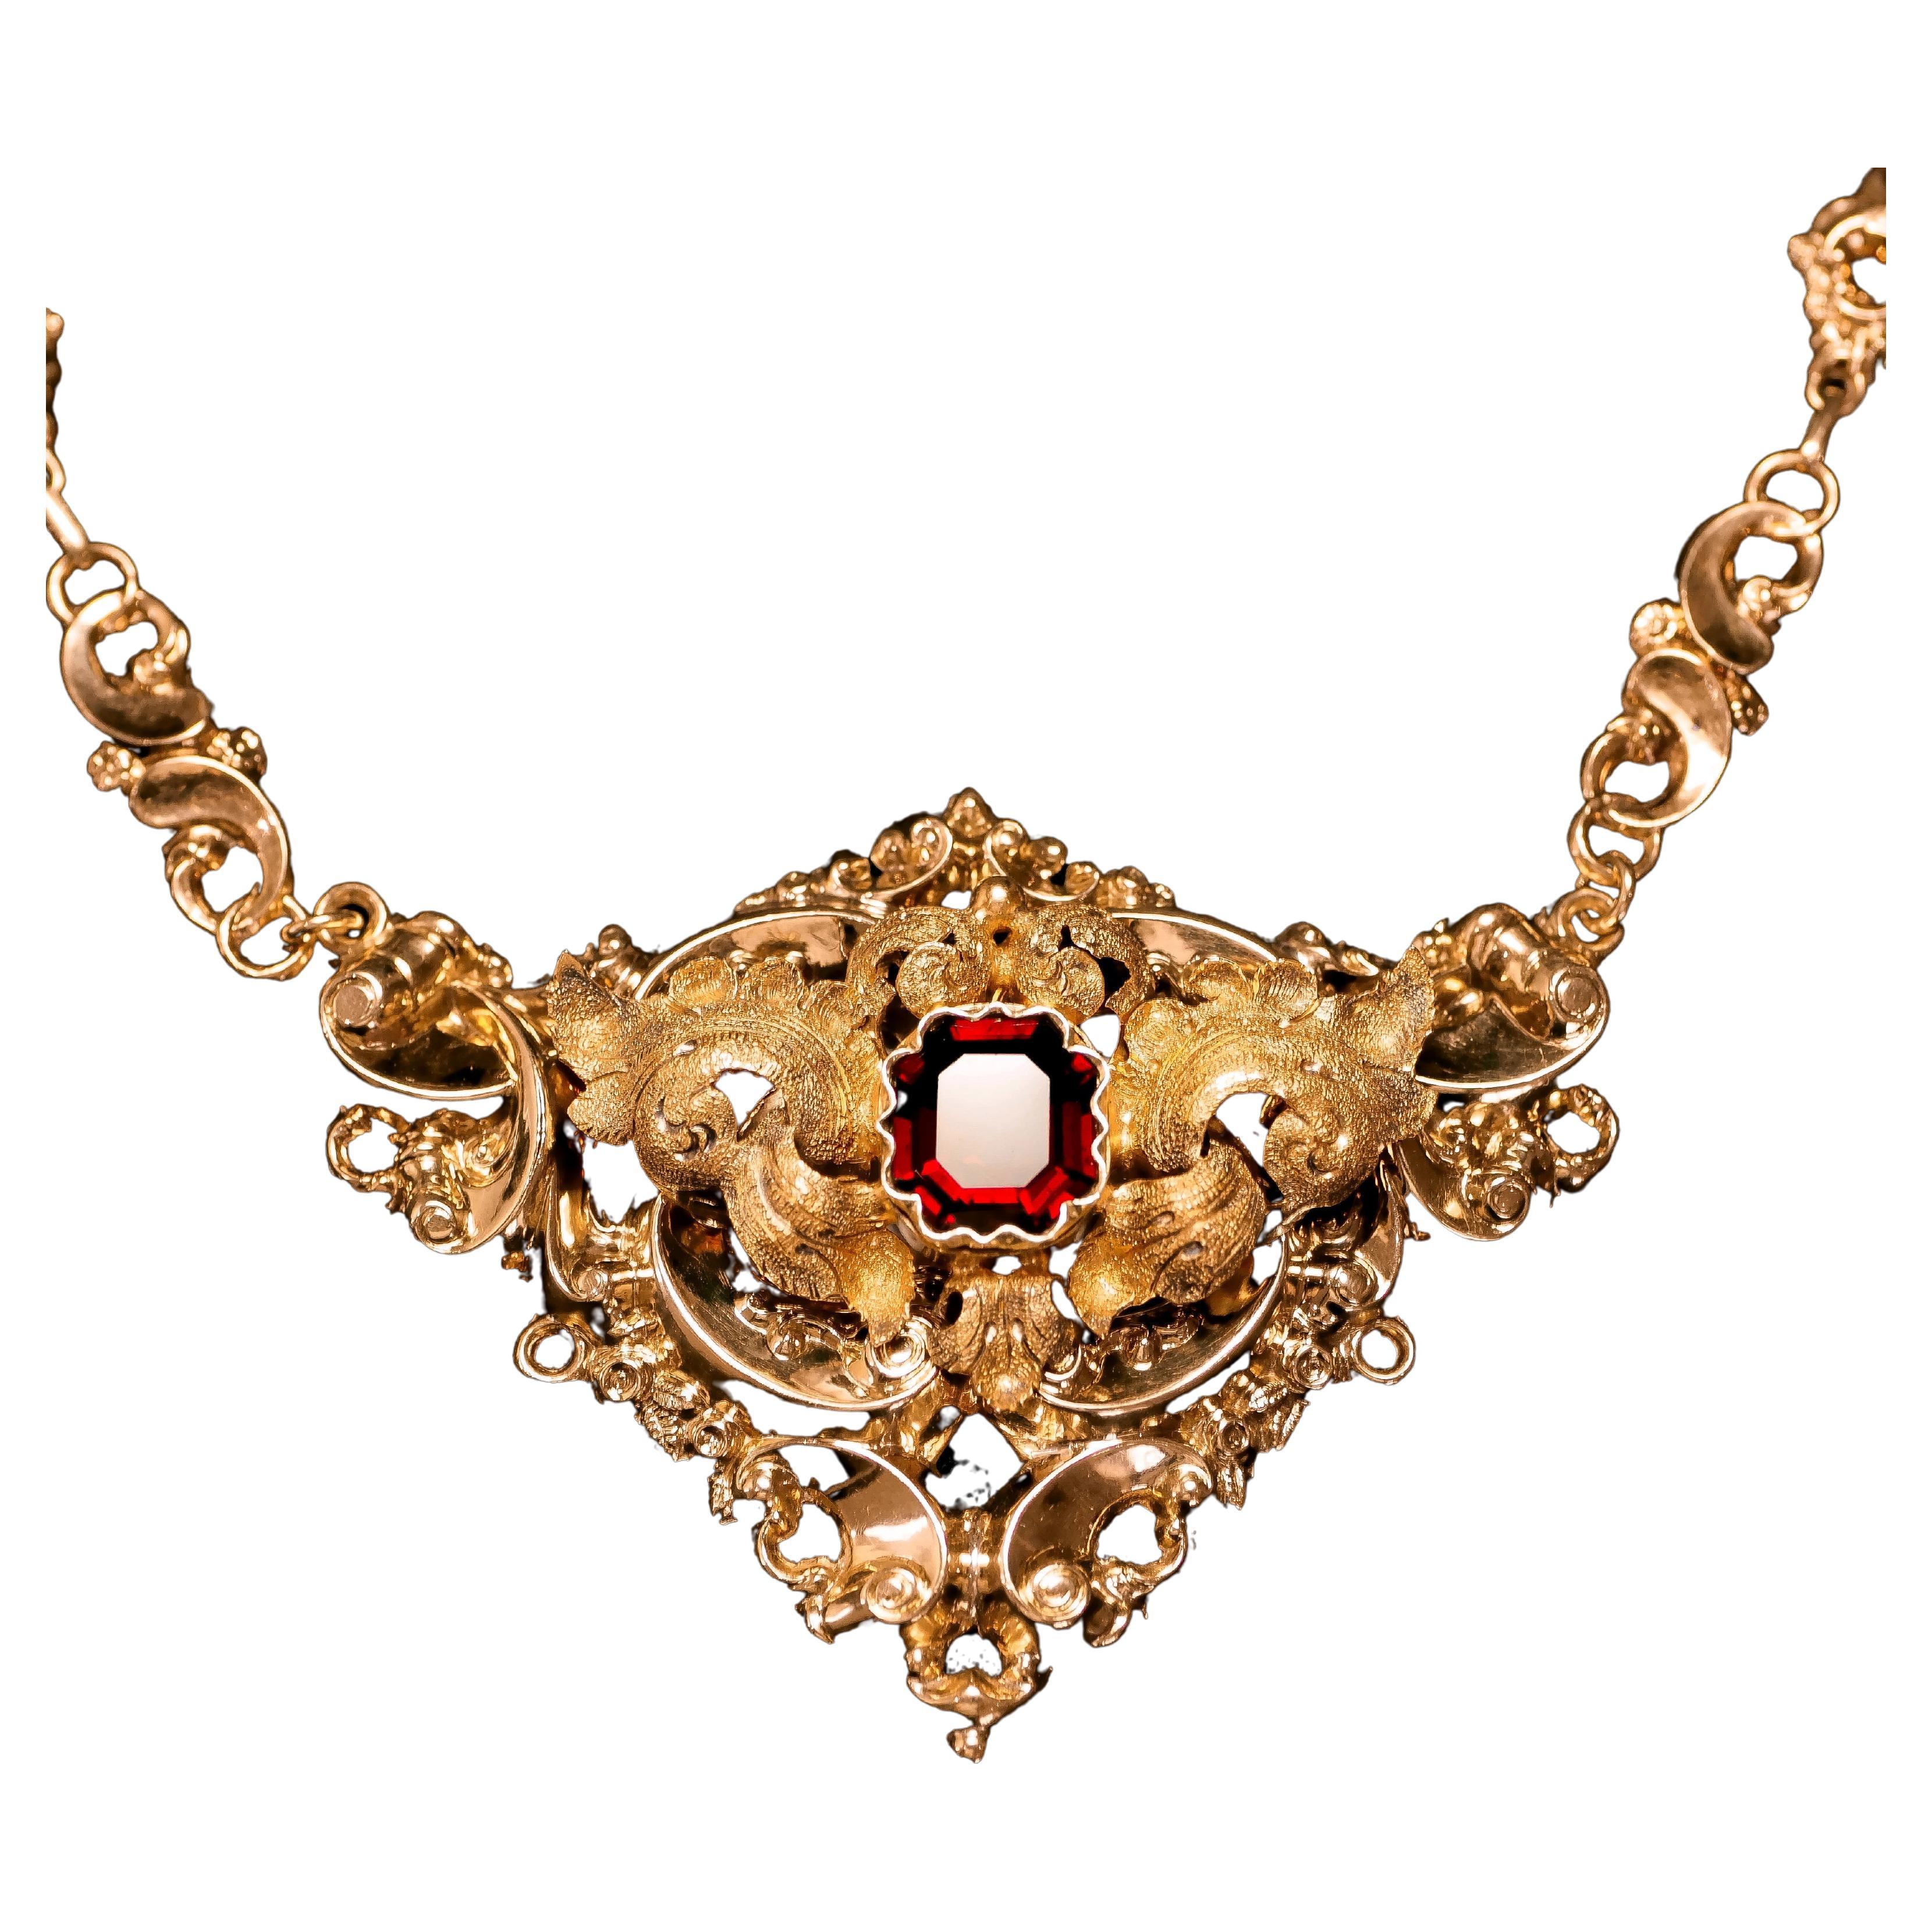 Antique Victorian 18K Gold Garnet Necklace in Baroque Revival Style, c.1840